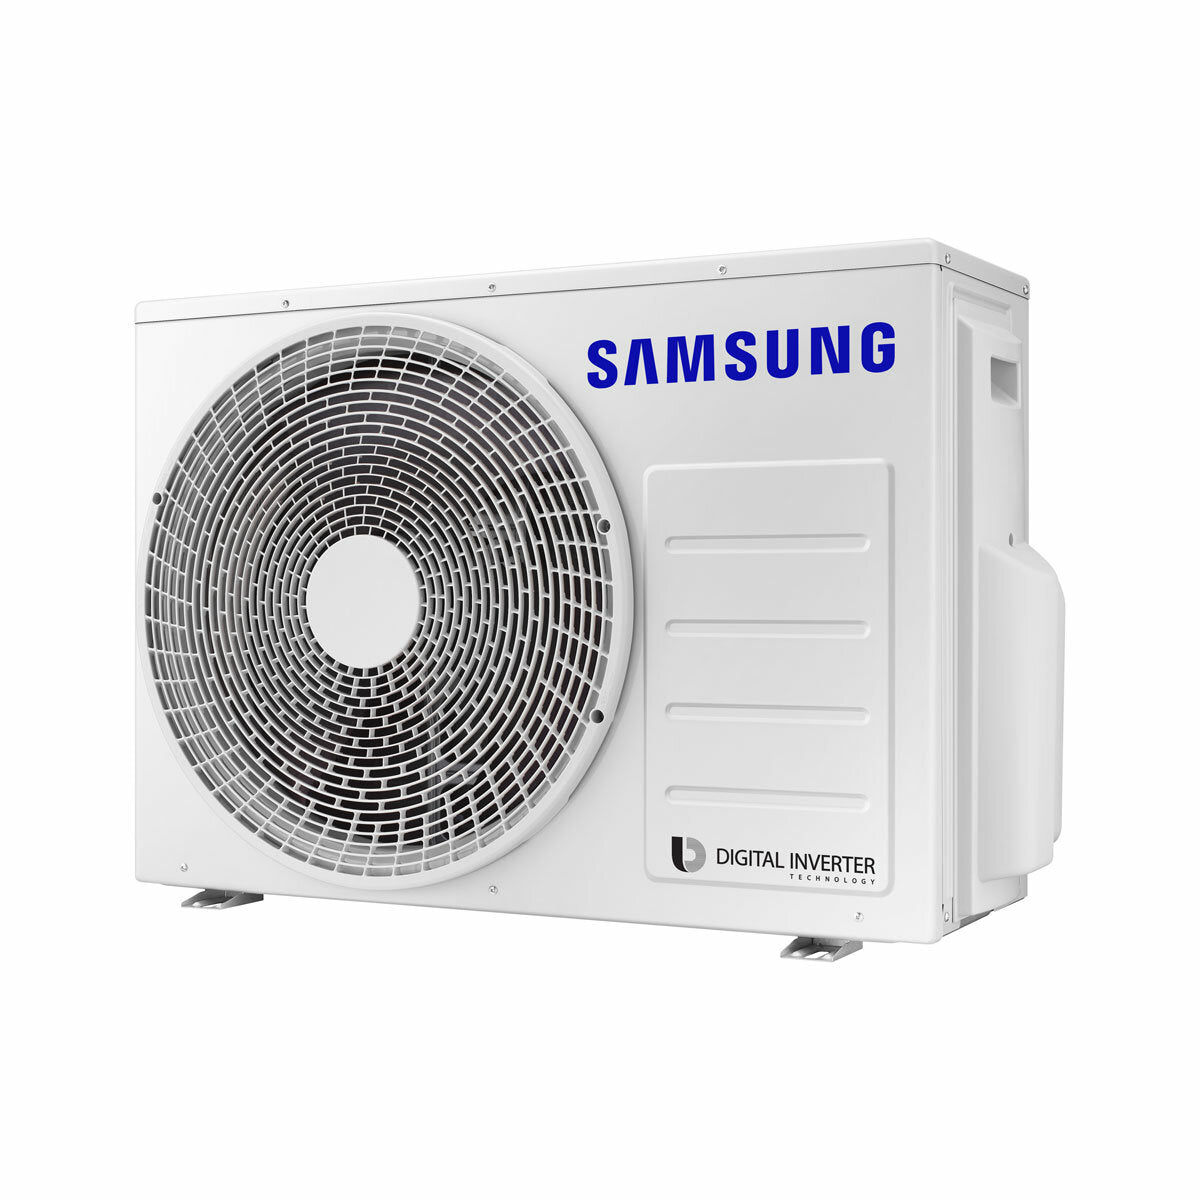 Samsung ducted air conditioner trial split 9000 + 9000 + 9000 BTU inverter A +++ outdoor unit 5.2 kW